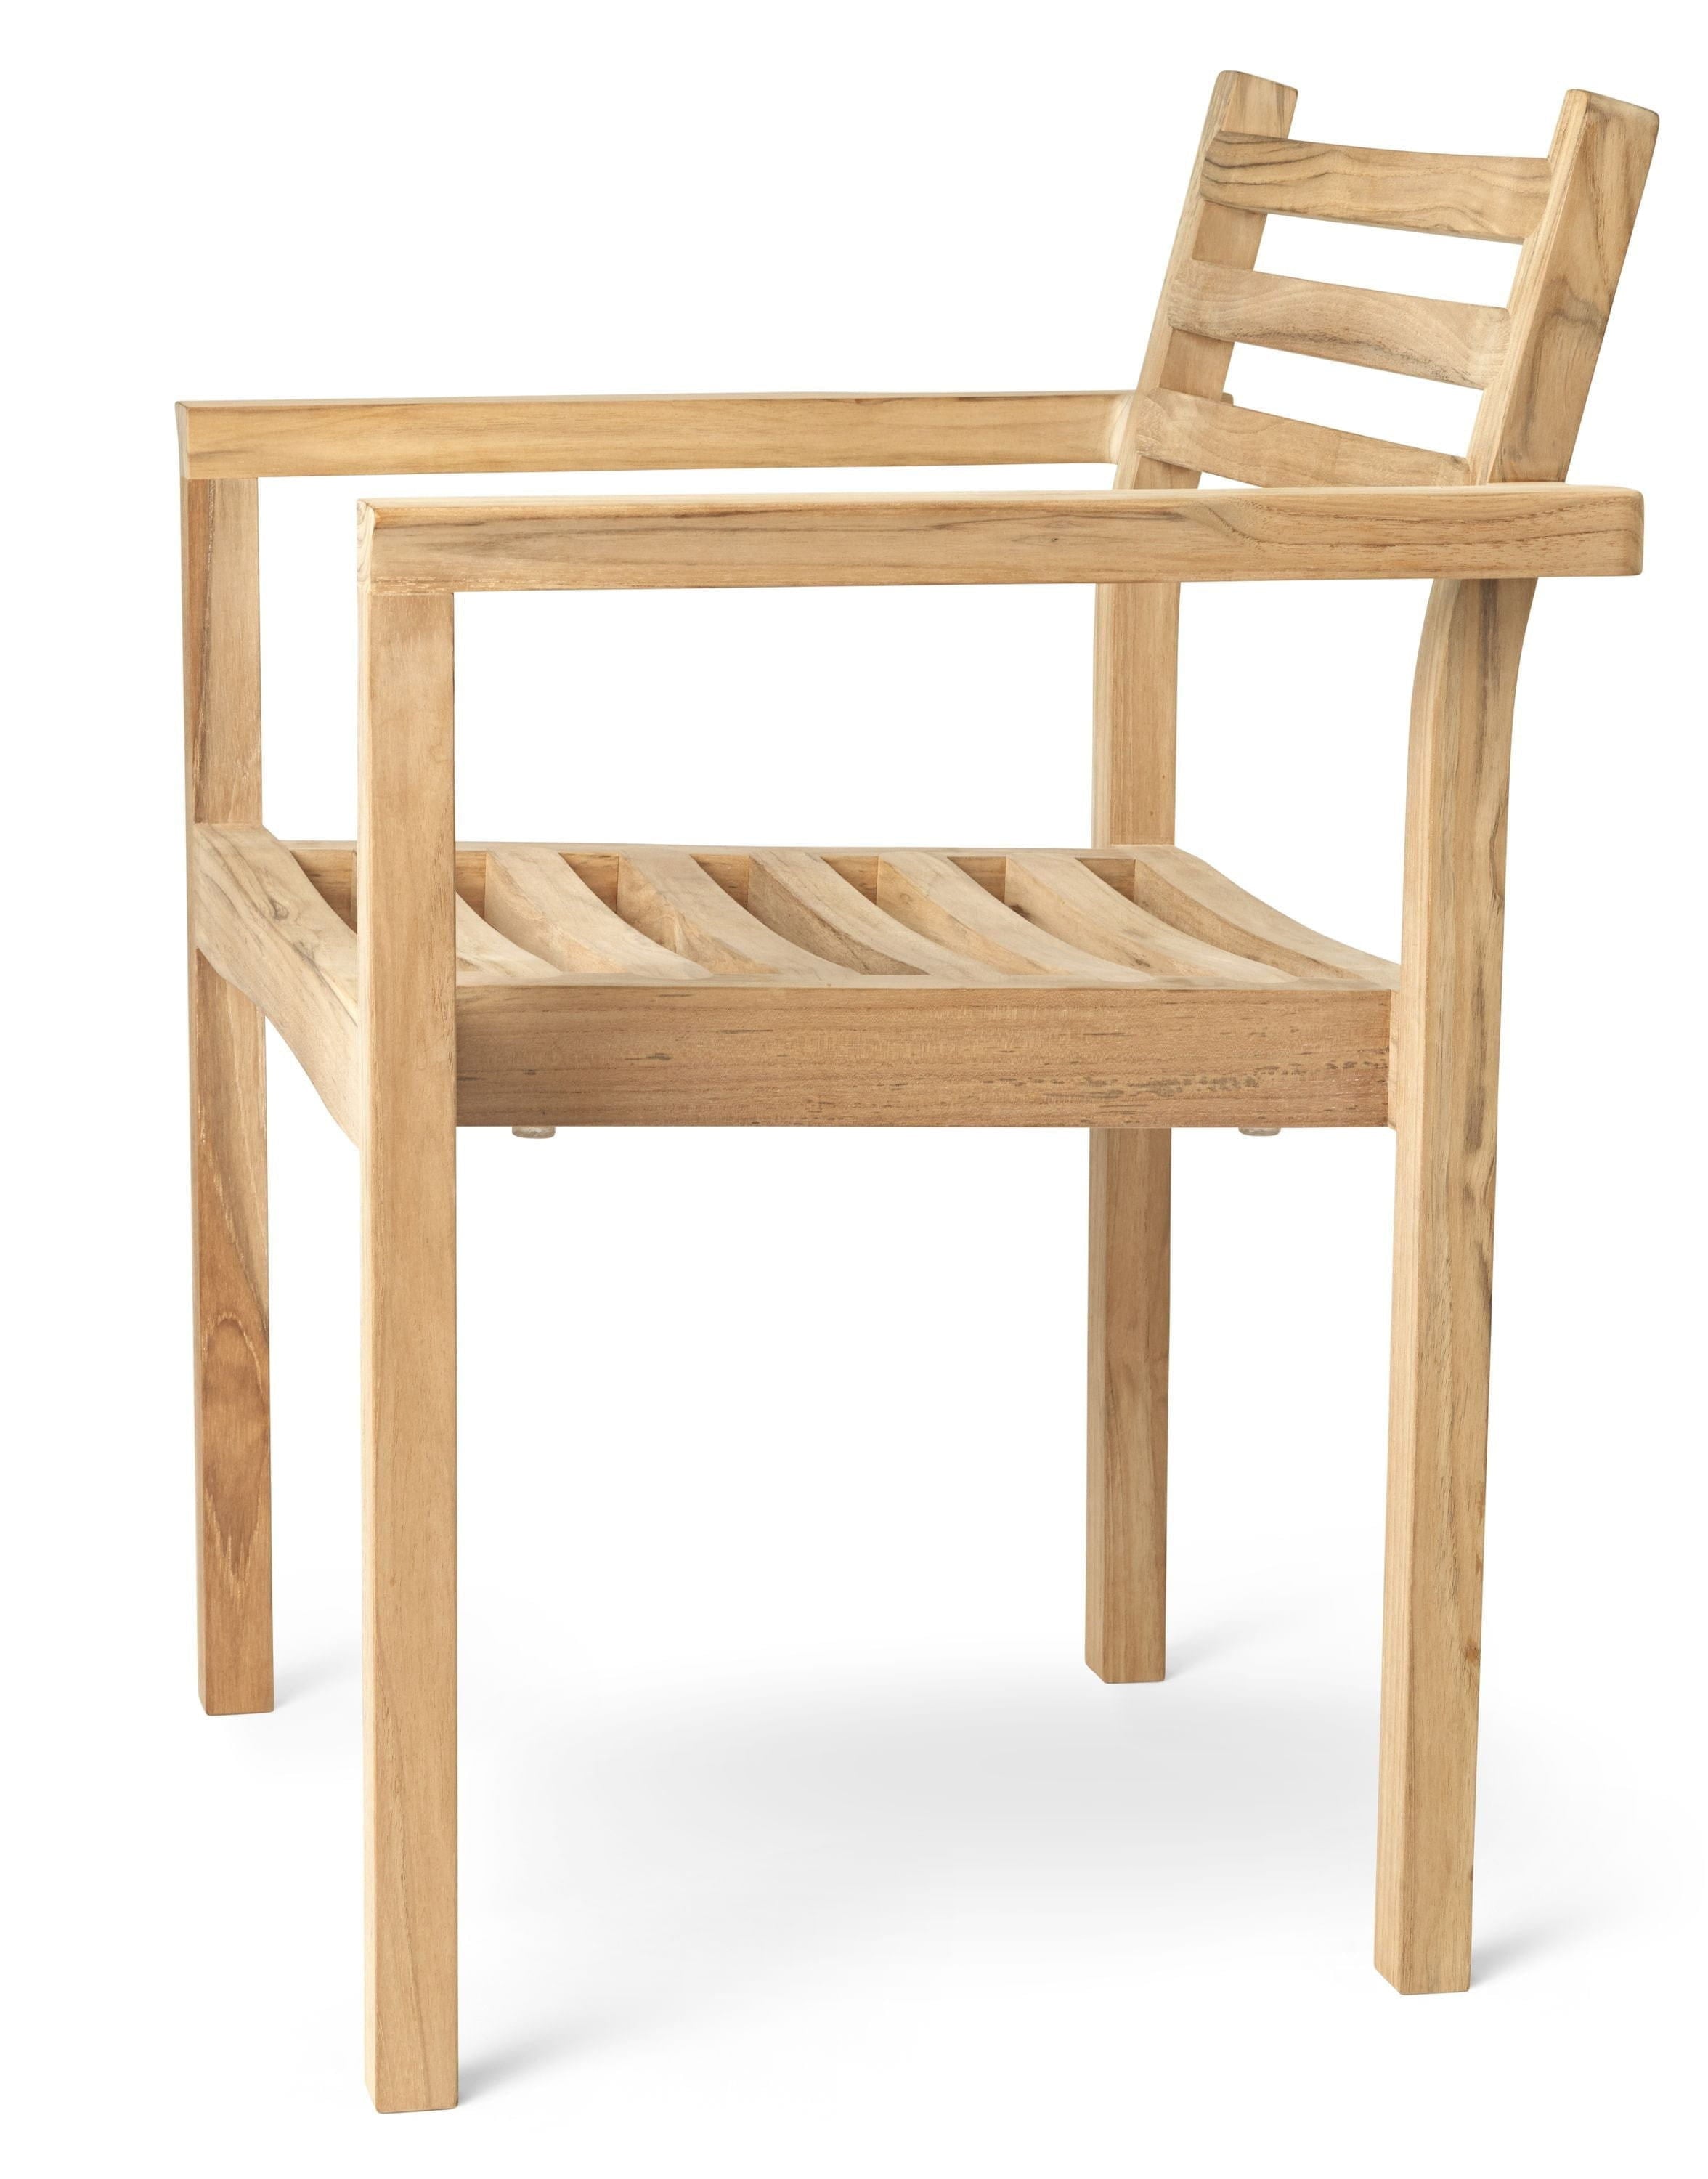 Carl Hansen Ah502 Outdoor Dining Chair With Armrest